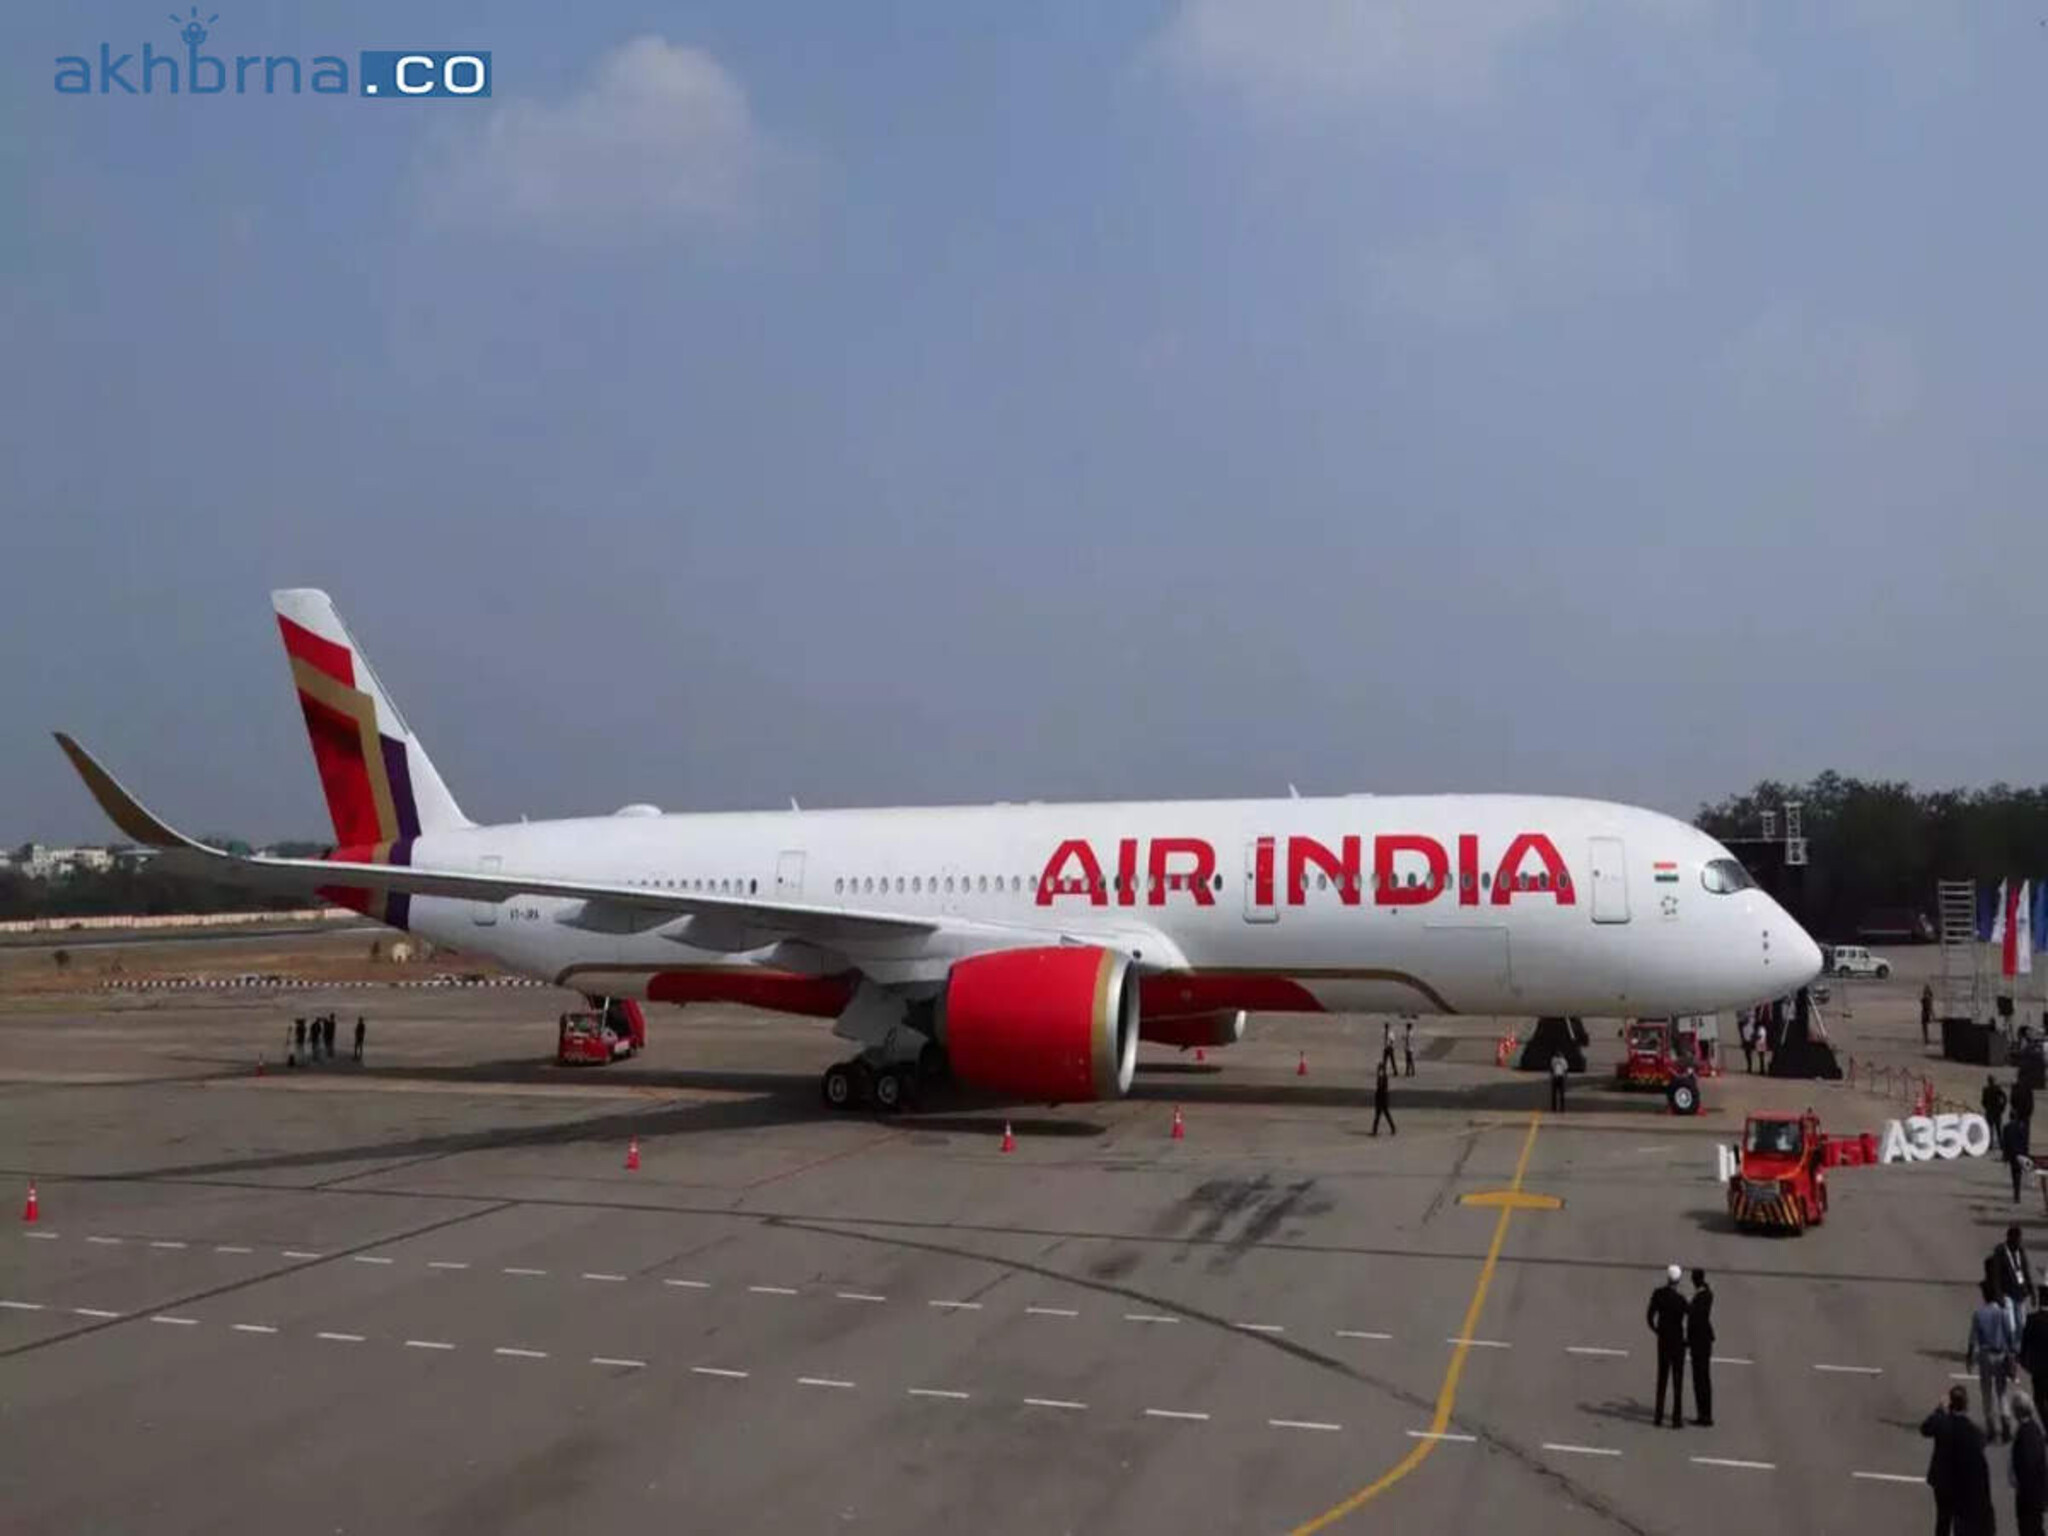 Air India deploys A350 on the Delhi-Dubai route for enhanced service starting Ma